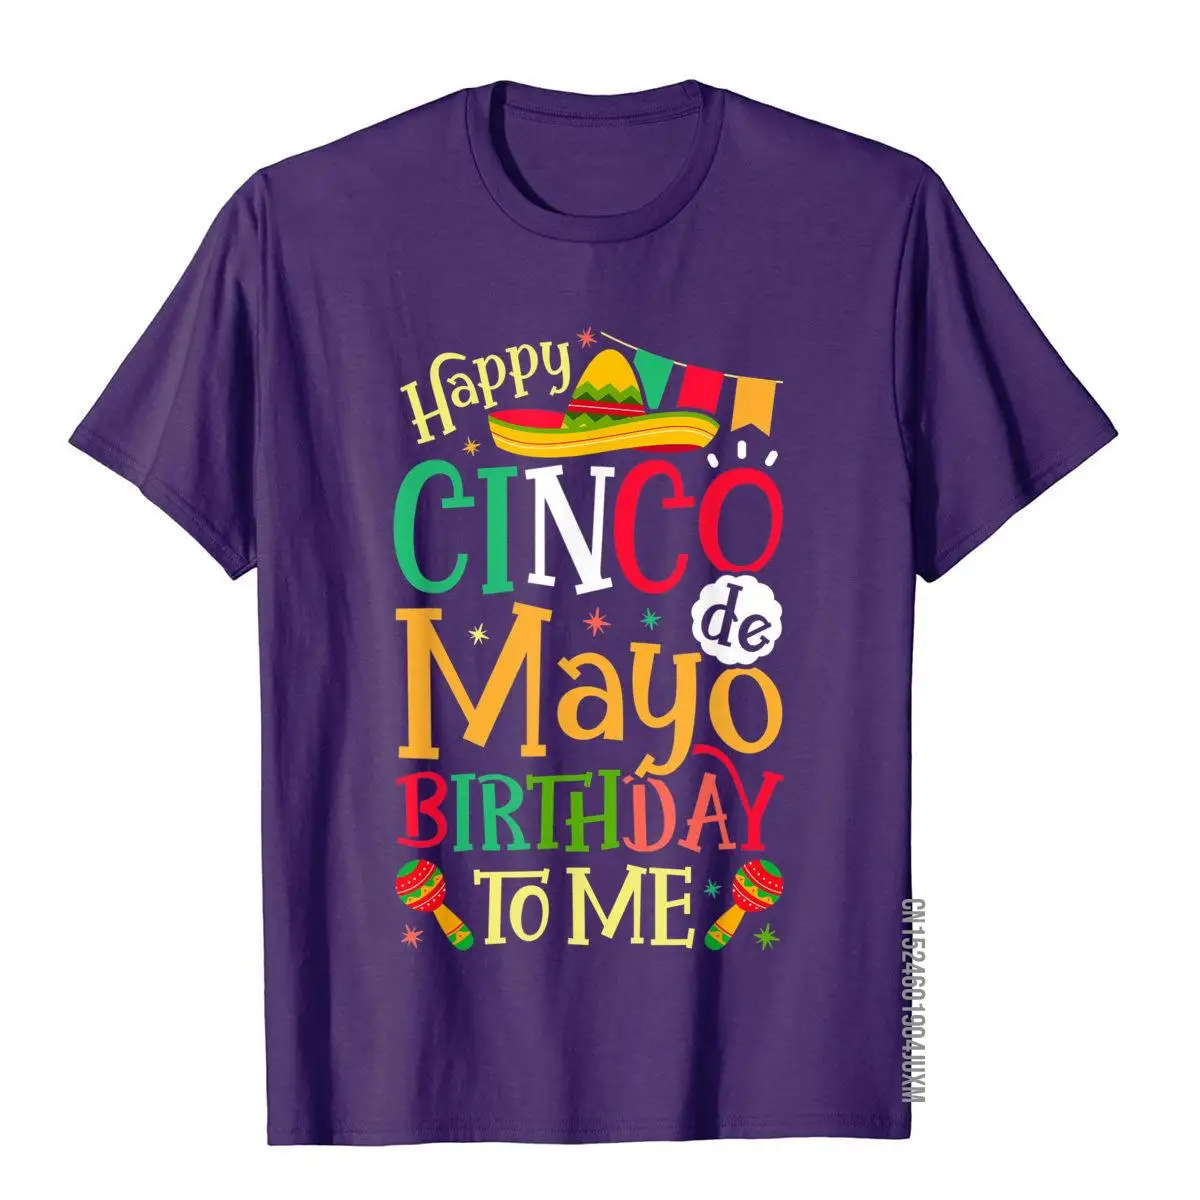 Happy Cinco de Mayo Birthday To Me Funny Mexican Men Women T-Shirt__97A781purple